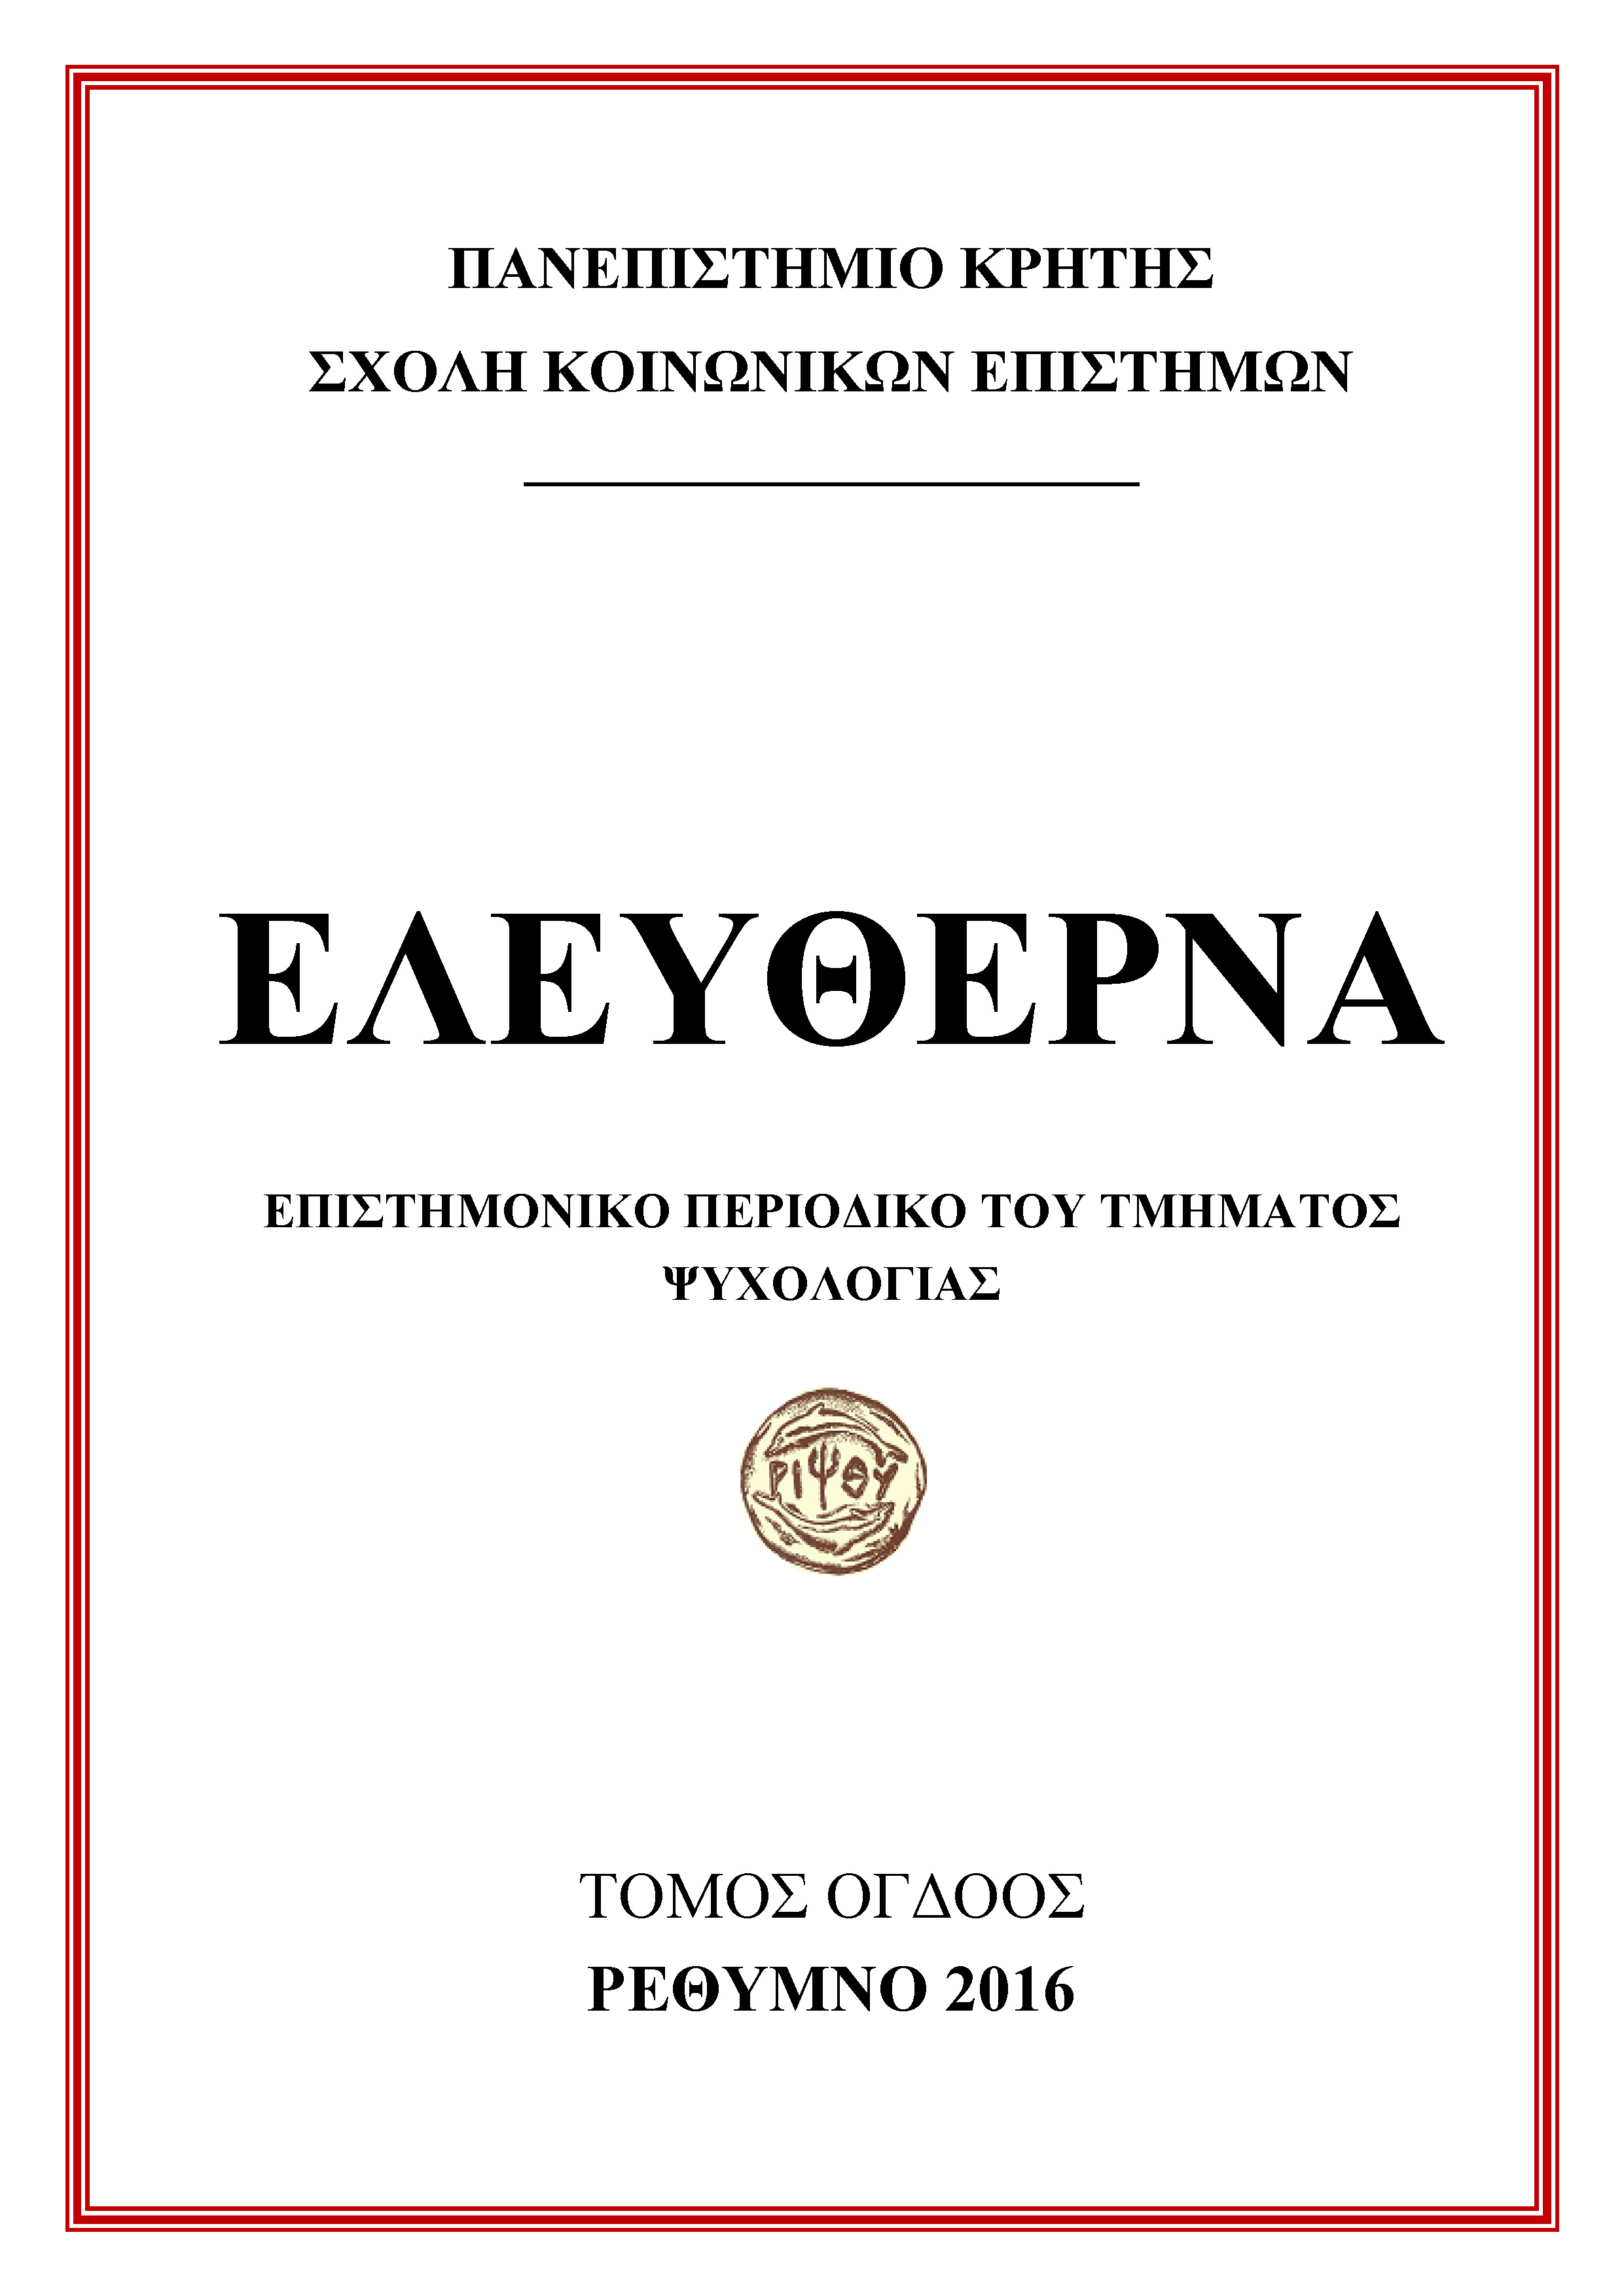 ELEYTHERNA ΤΟΜΟΣ ΟΓΔΟΟΣ / VOLUME VΙΙI